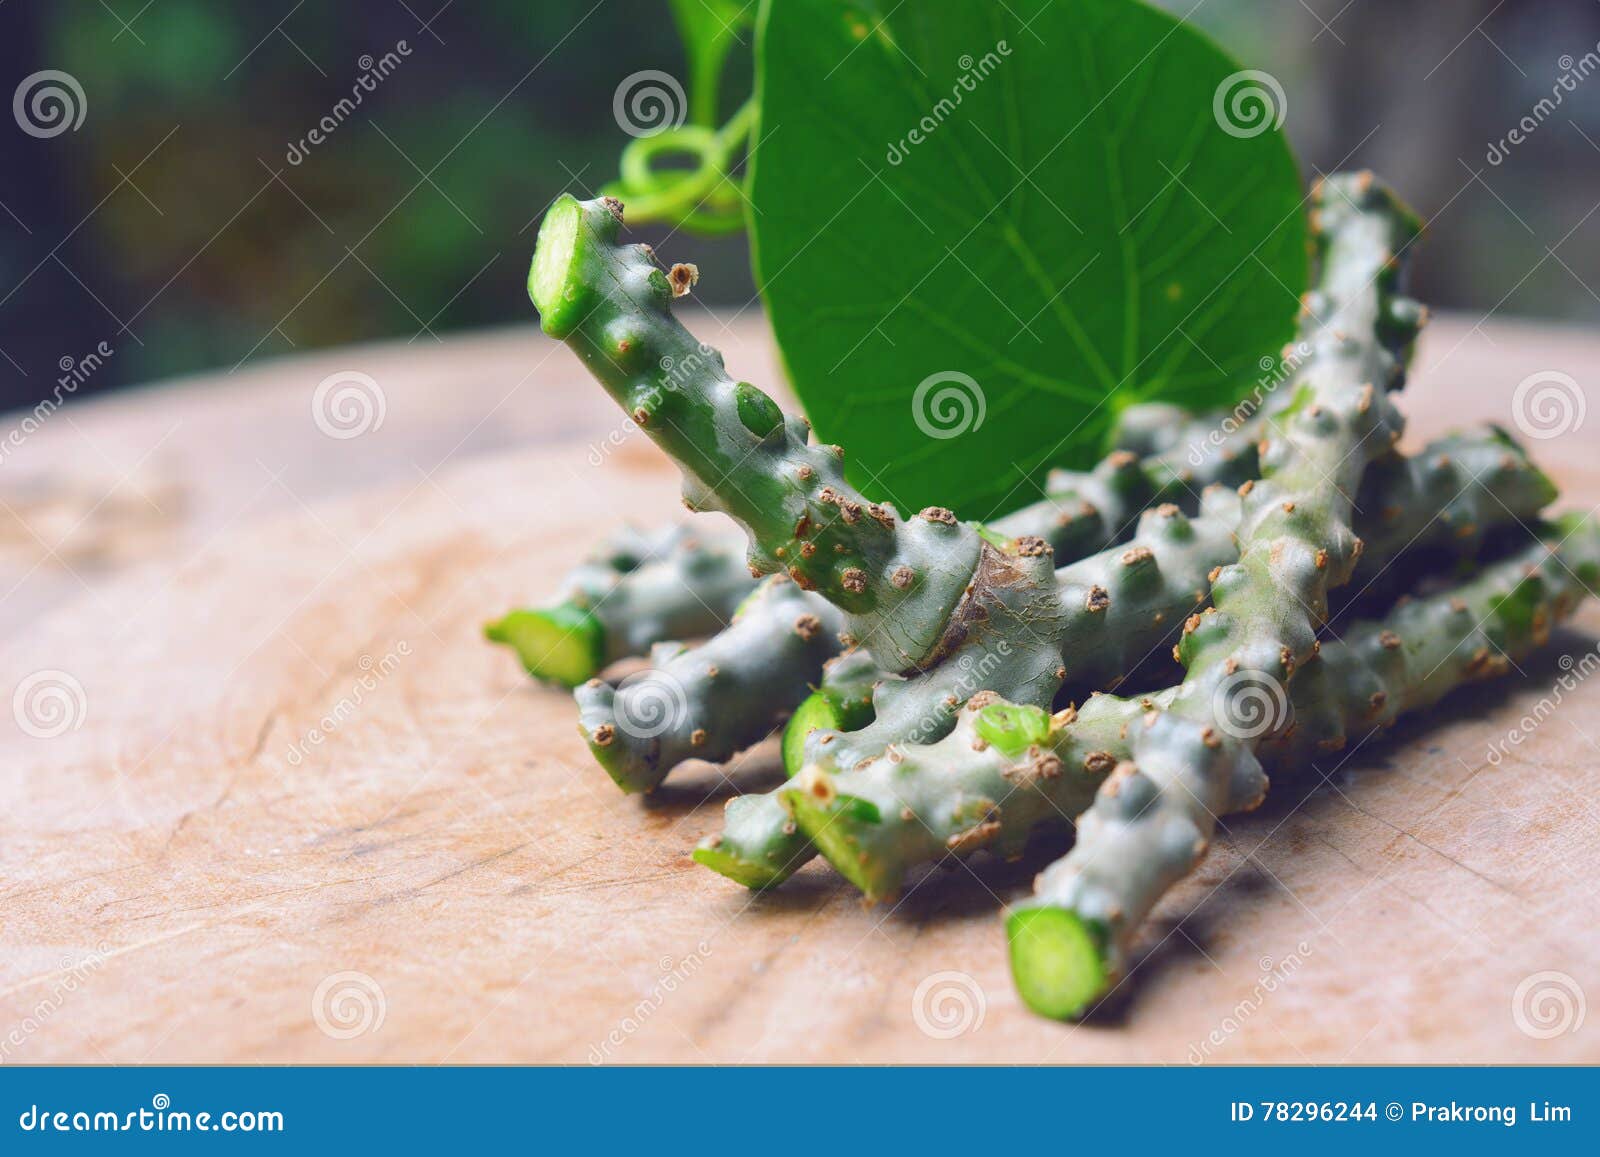 tinospora cordifolia herb